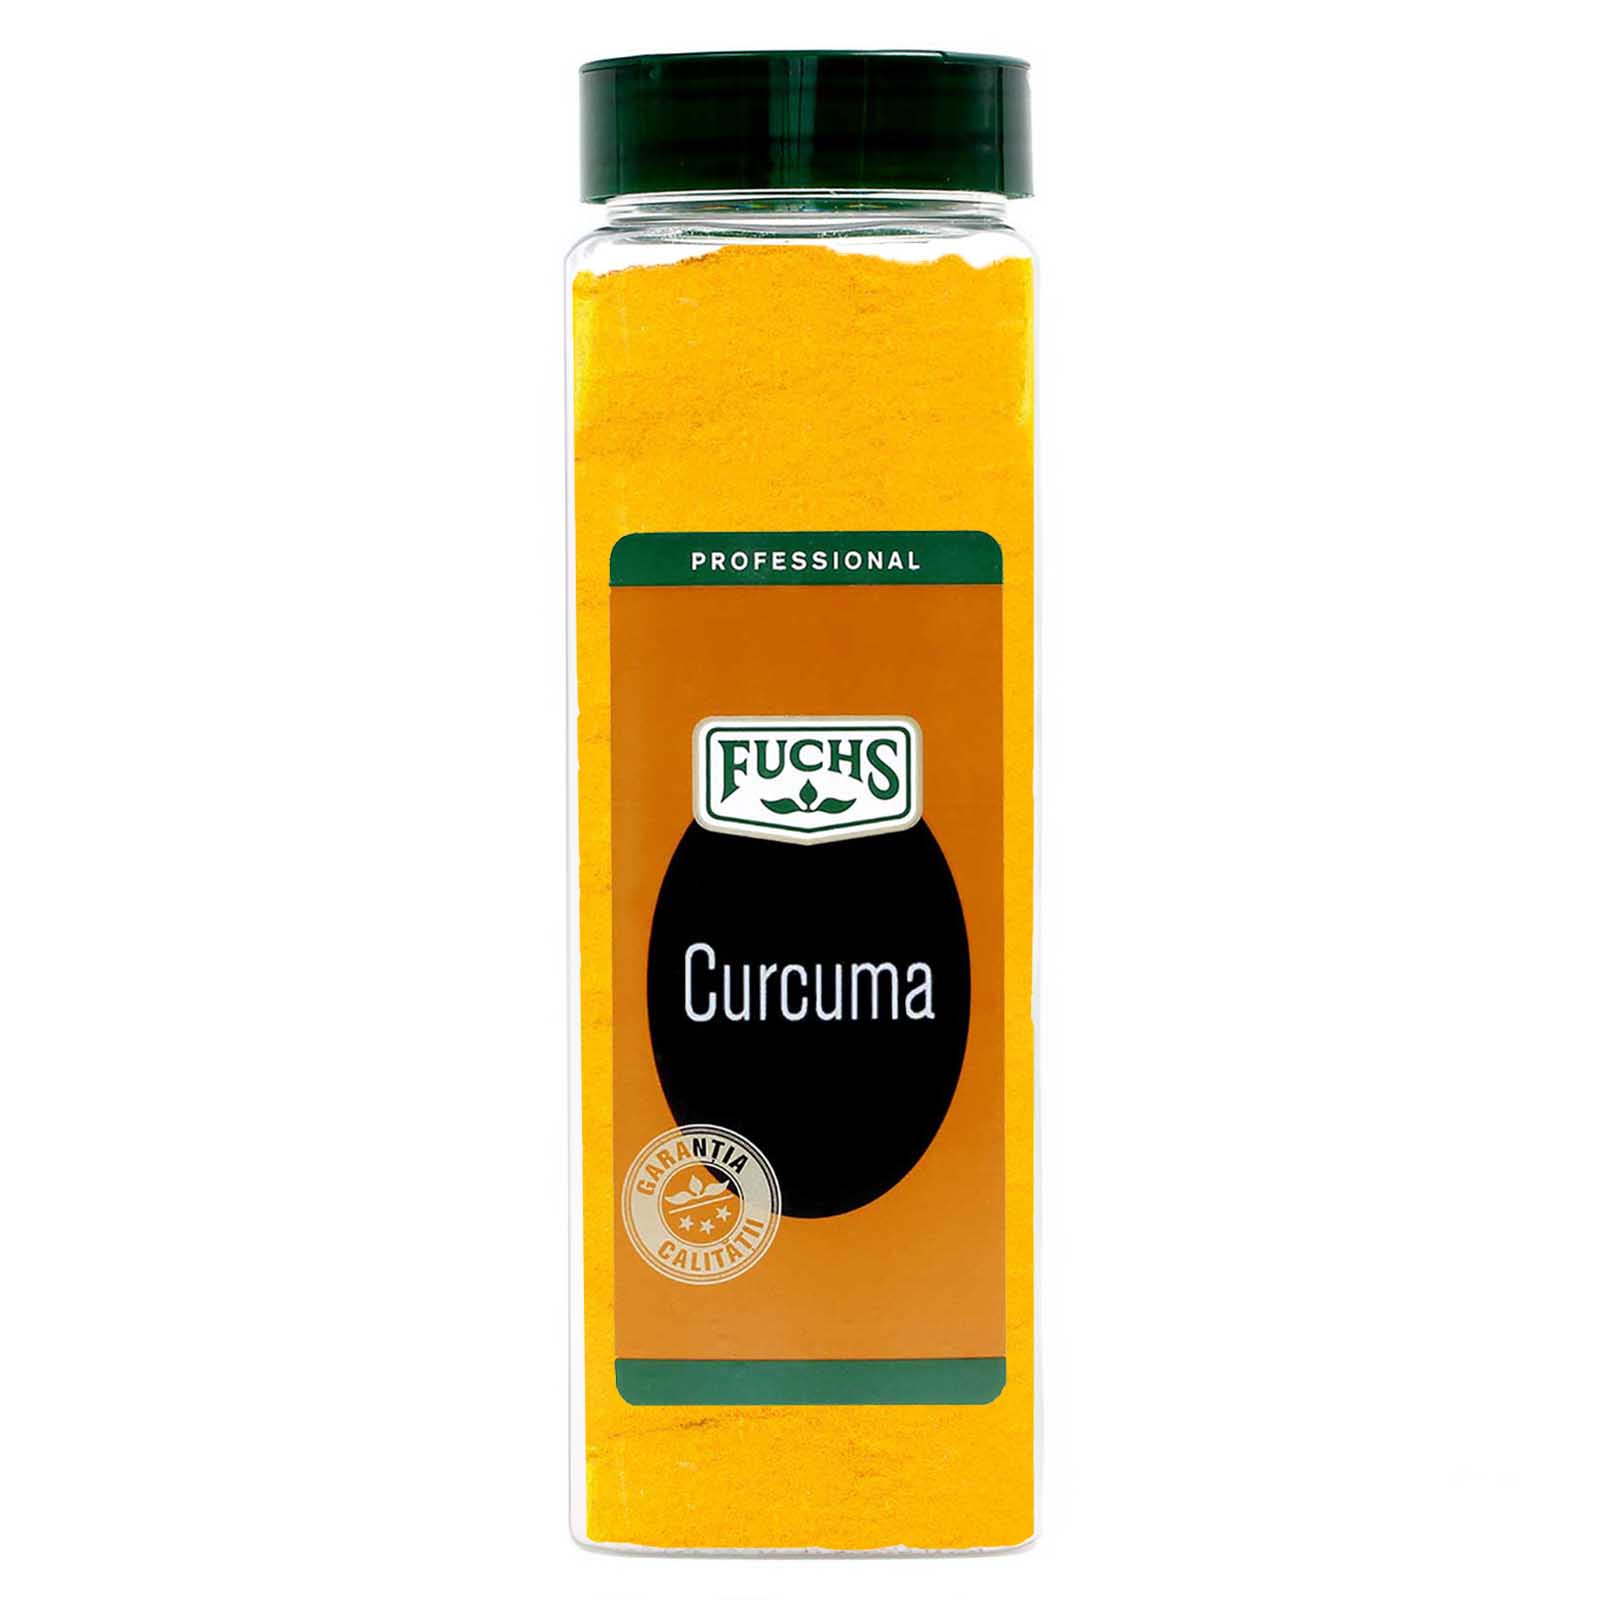 Curcuma, Fuchs, 500g